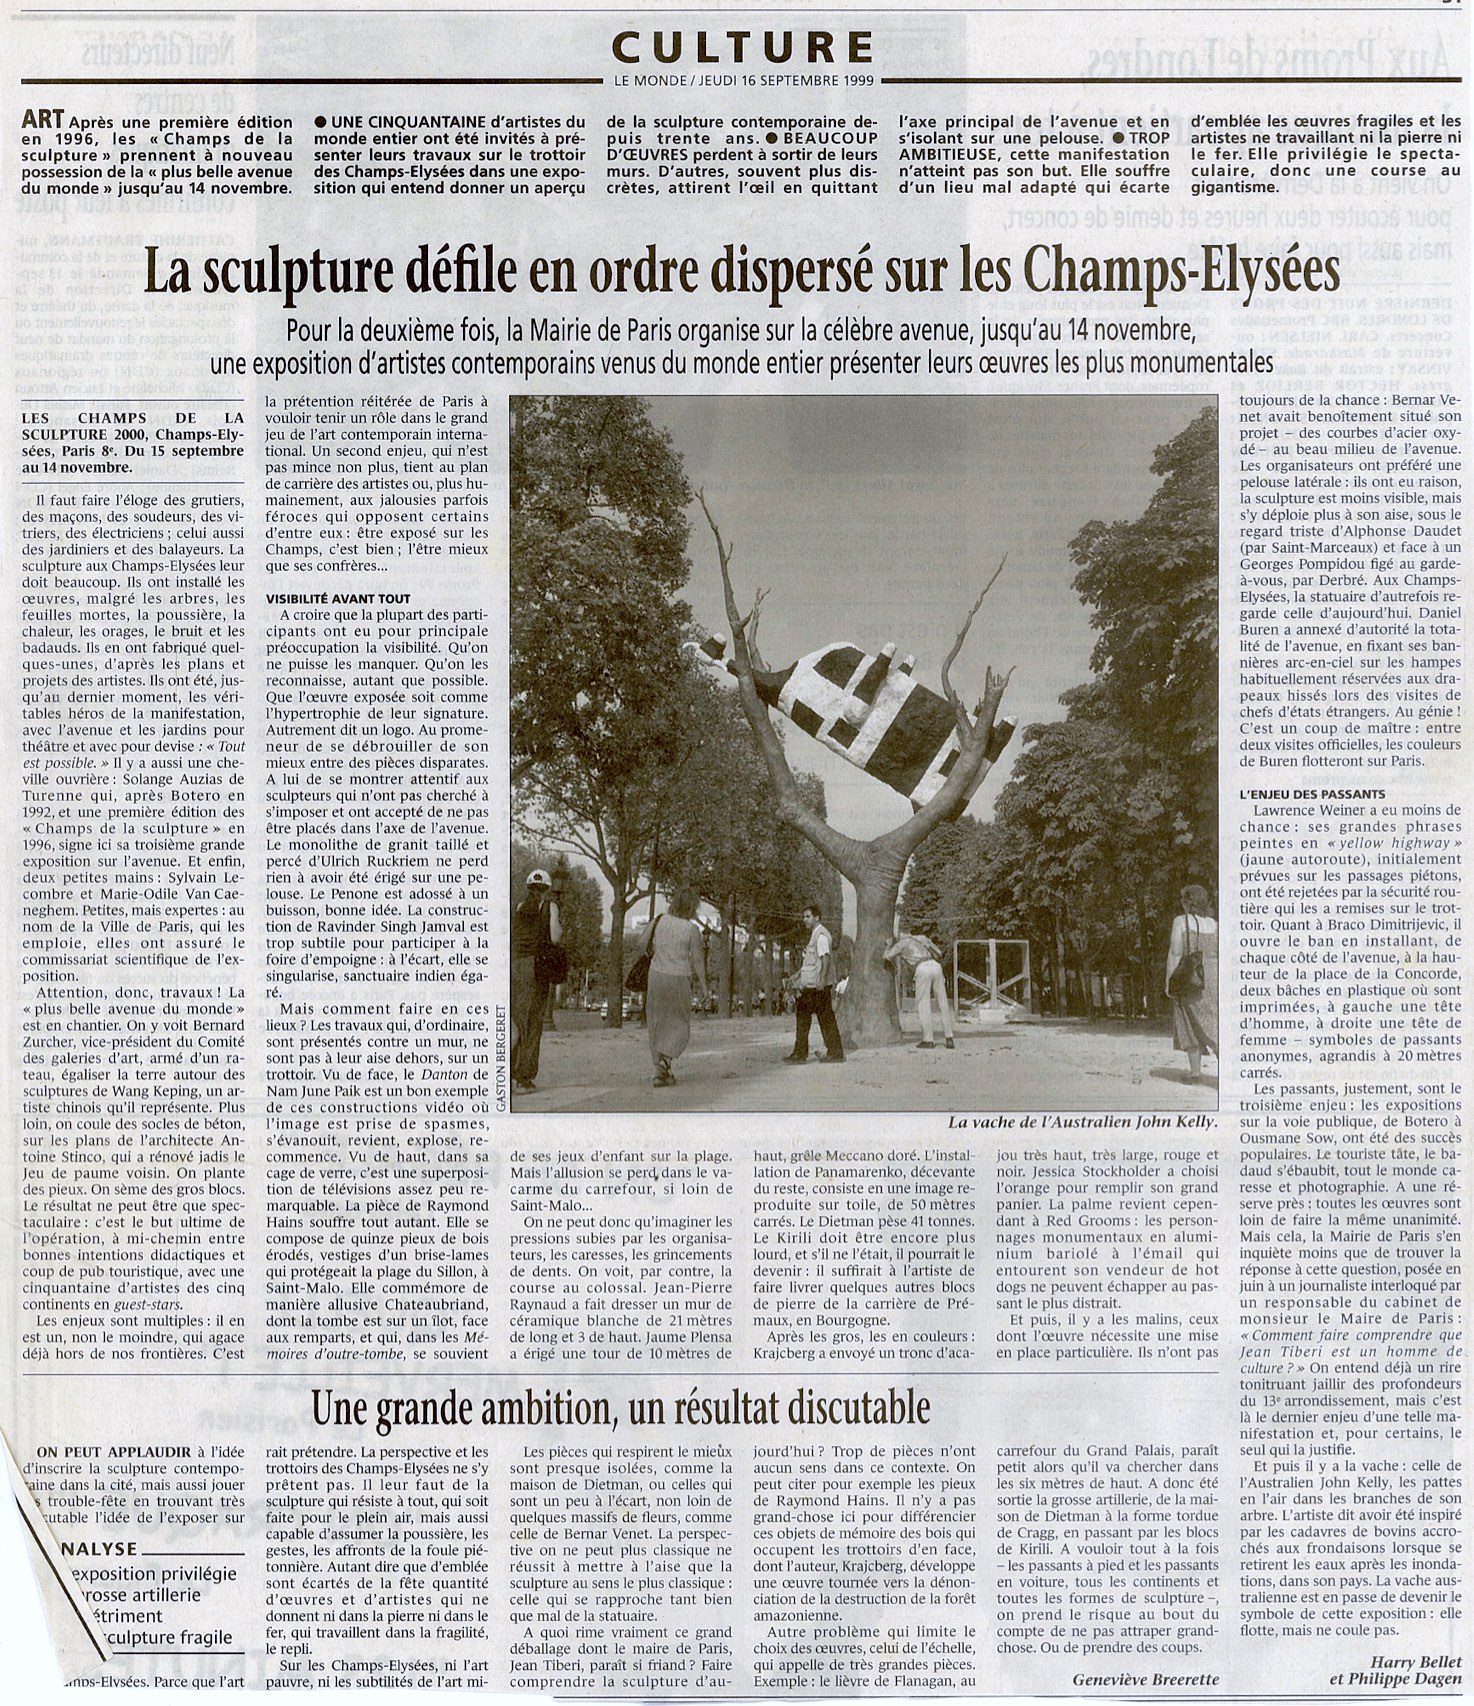 Harry Bellet and Philippe Dagen, ‘La sculpture défile en ordre dispersé sur les Champs-Elysées’, Le Monde, 16 September 1999; full-page newspaper article with ‘Cow up a Tree’ the central image, in black-and-white